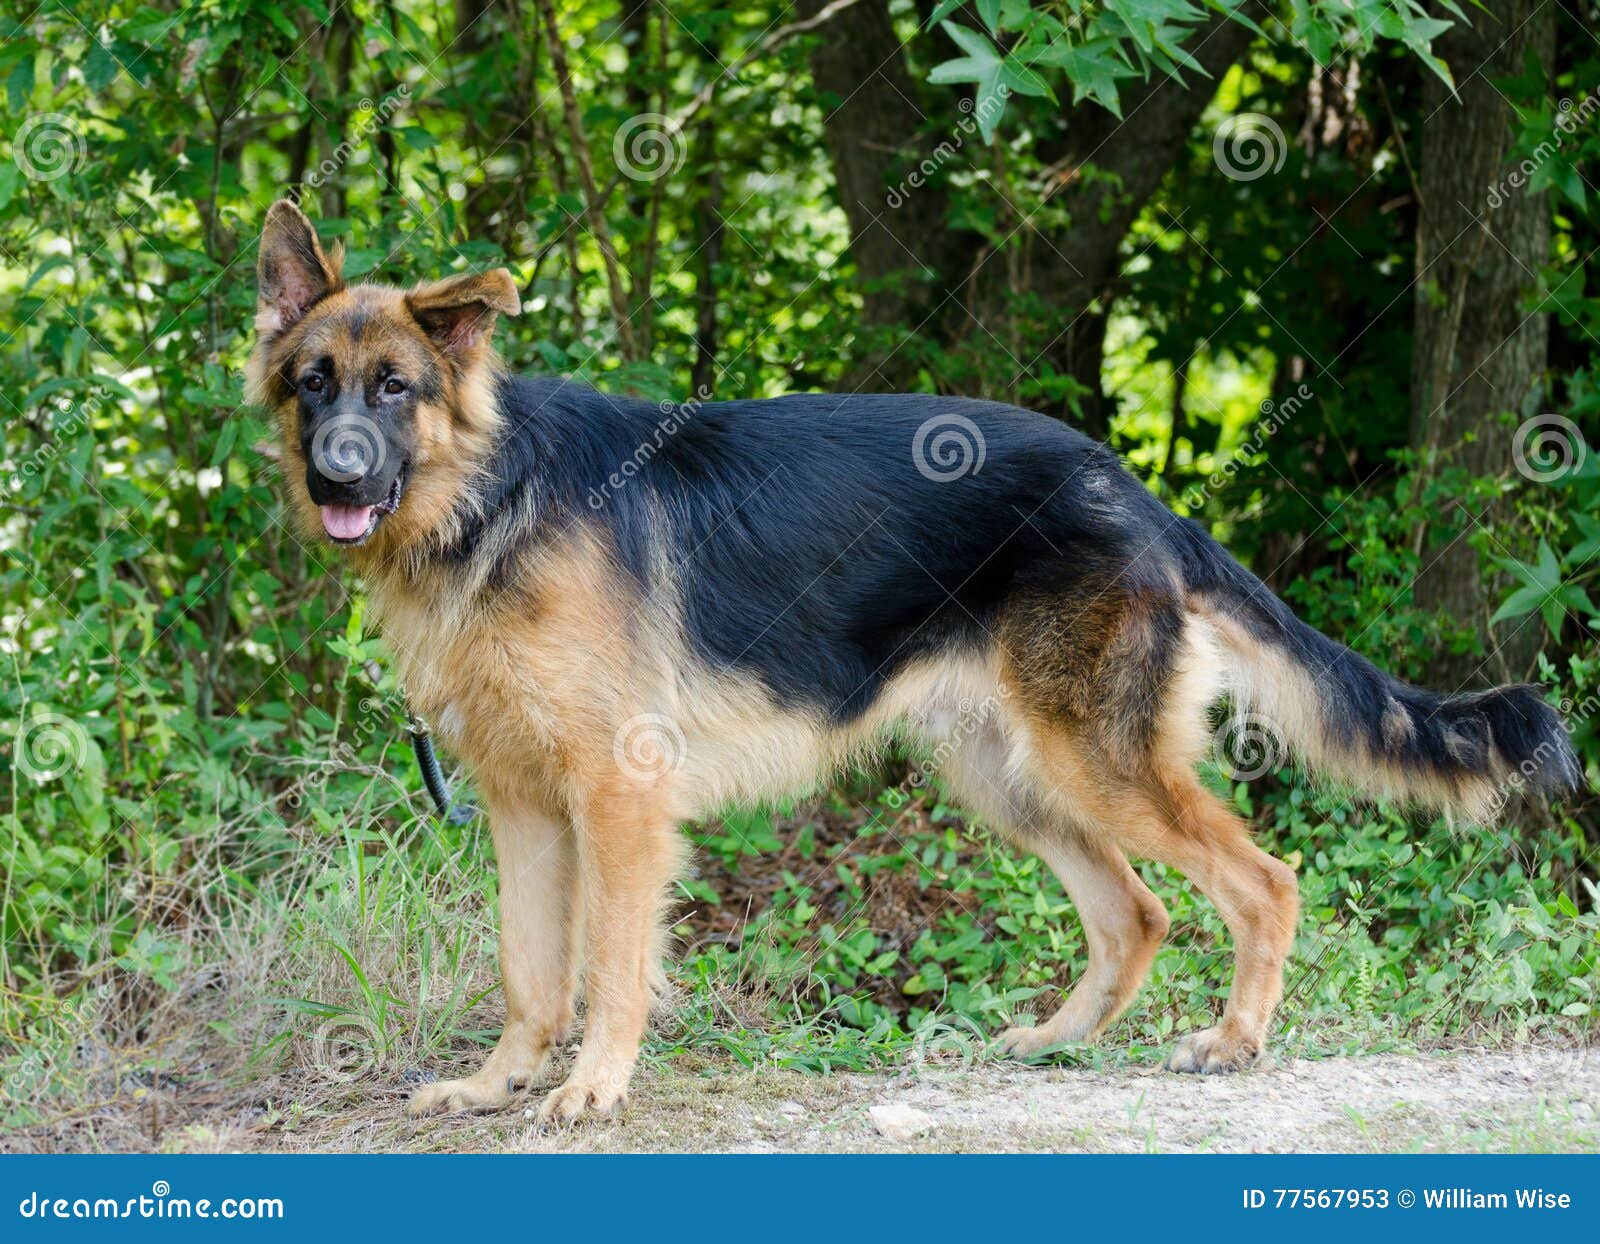 Long Haired German Shepherd Dog Stock Image Image Of Bull Puppy 77567953